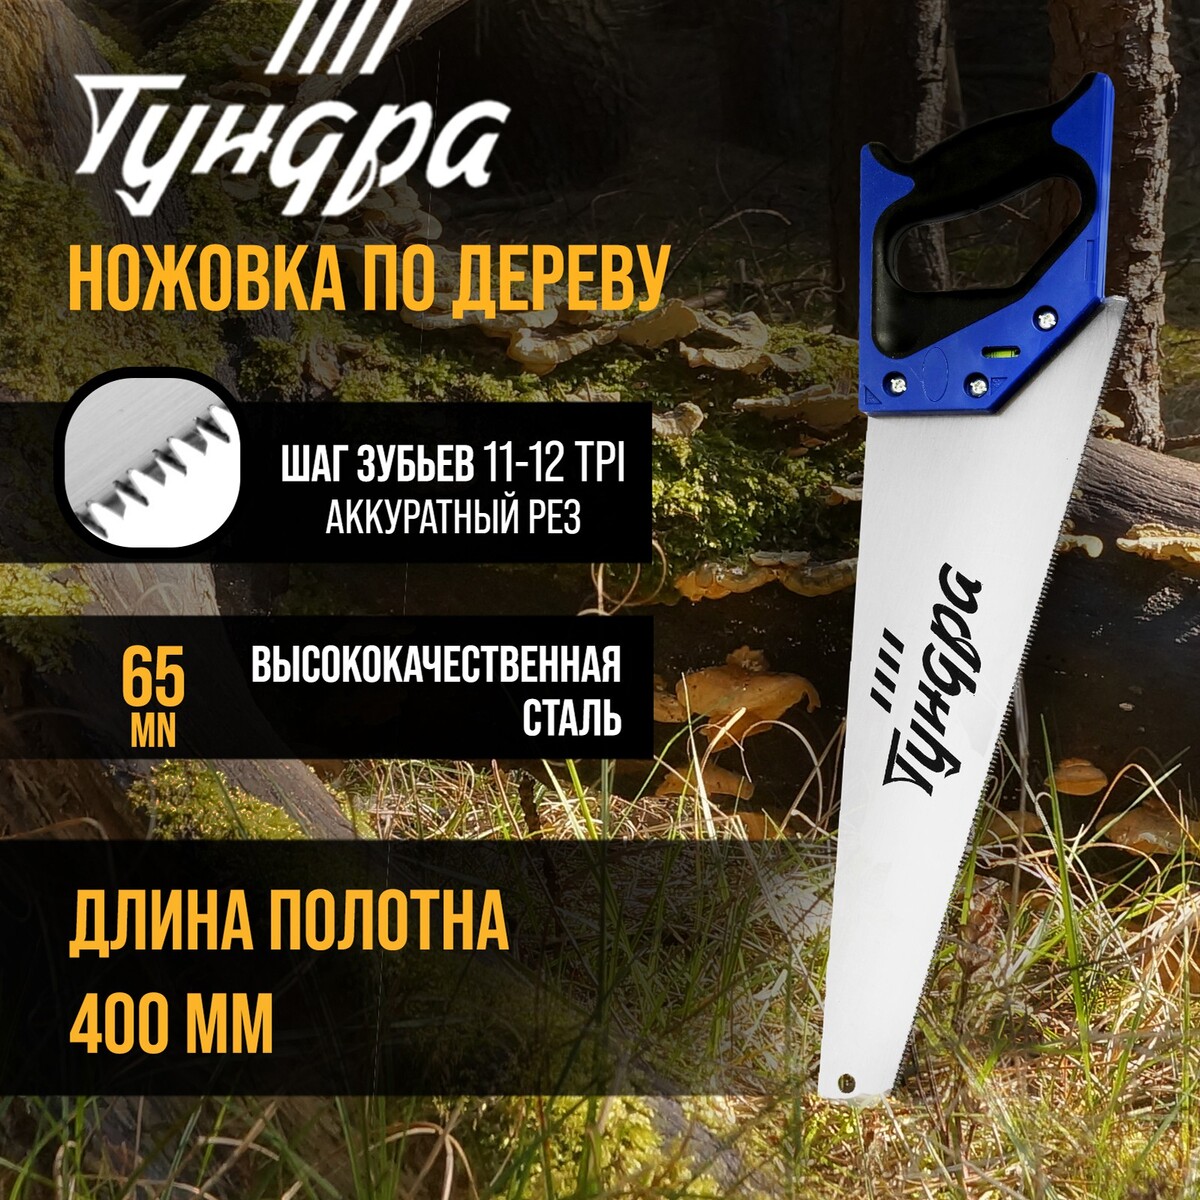 Ножовка по дереву тундра, 2к рукоятка, 3d заточка, аккуратный рез, 11-12 tpi, 400 мм